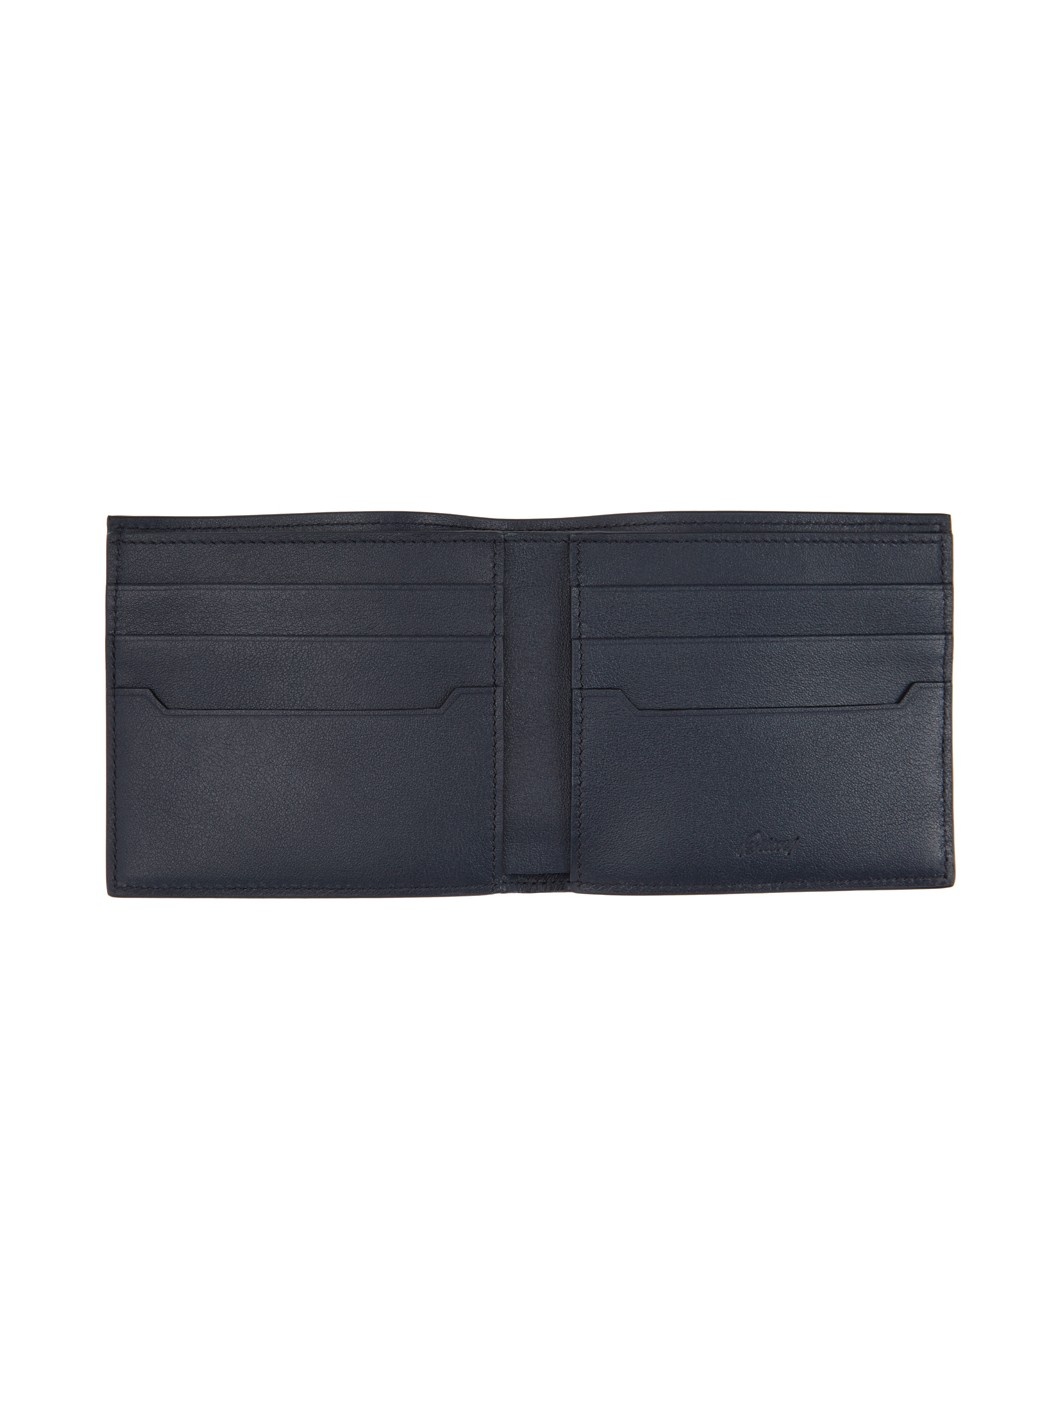 Black & Navy Classic Wallet - 3